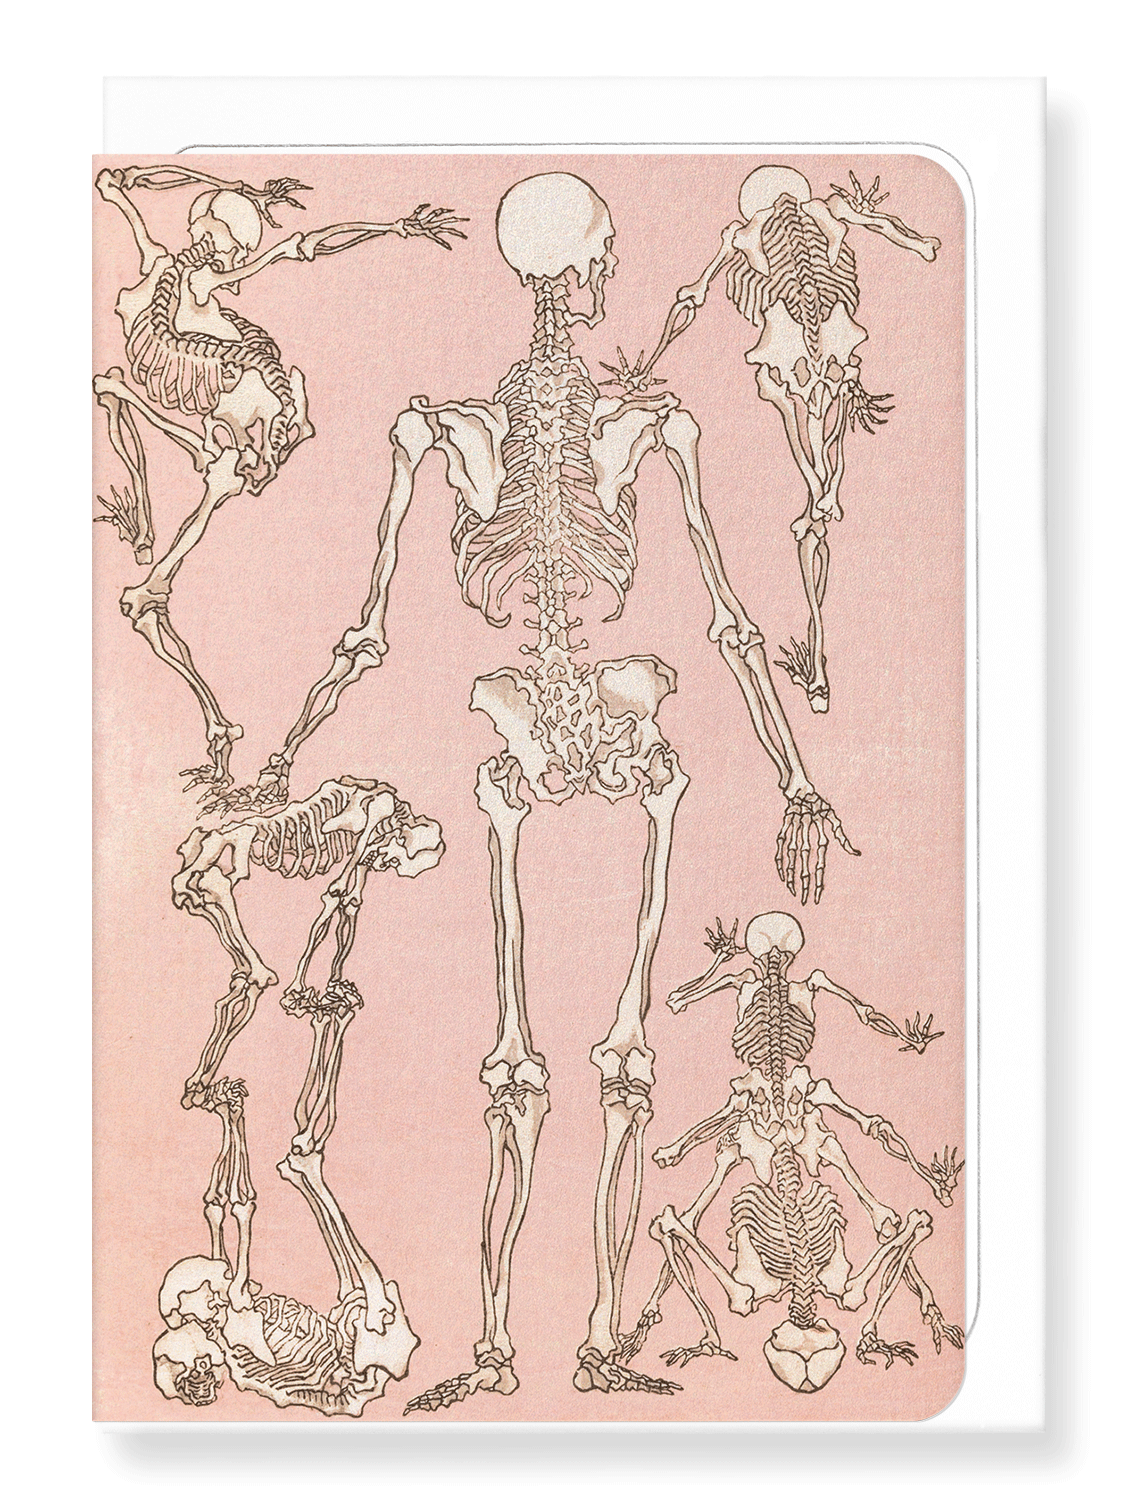 Ezen Designs - Study of Skeletons Back (1881) - Greeting Card - Front